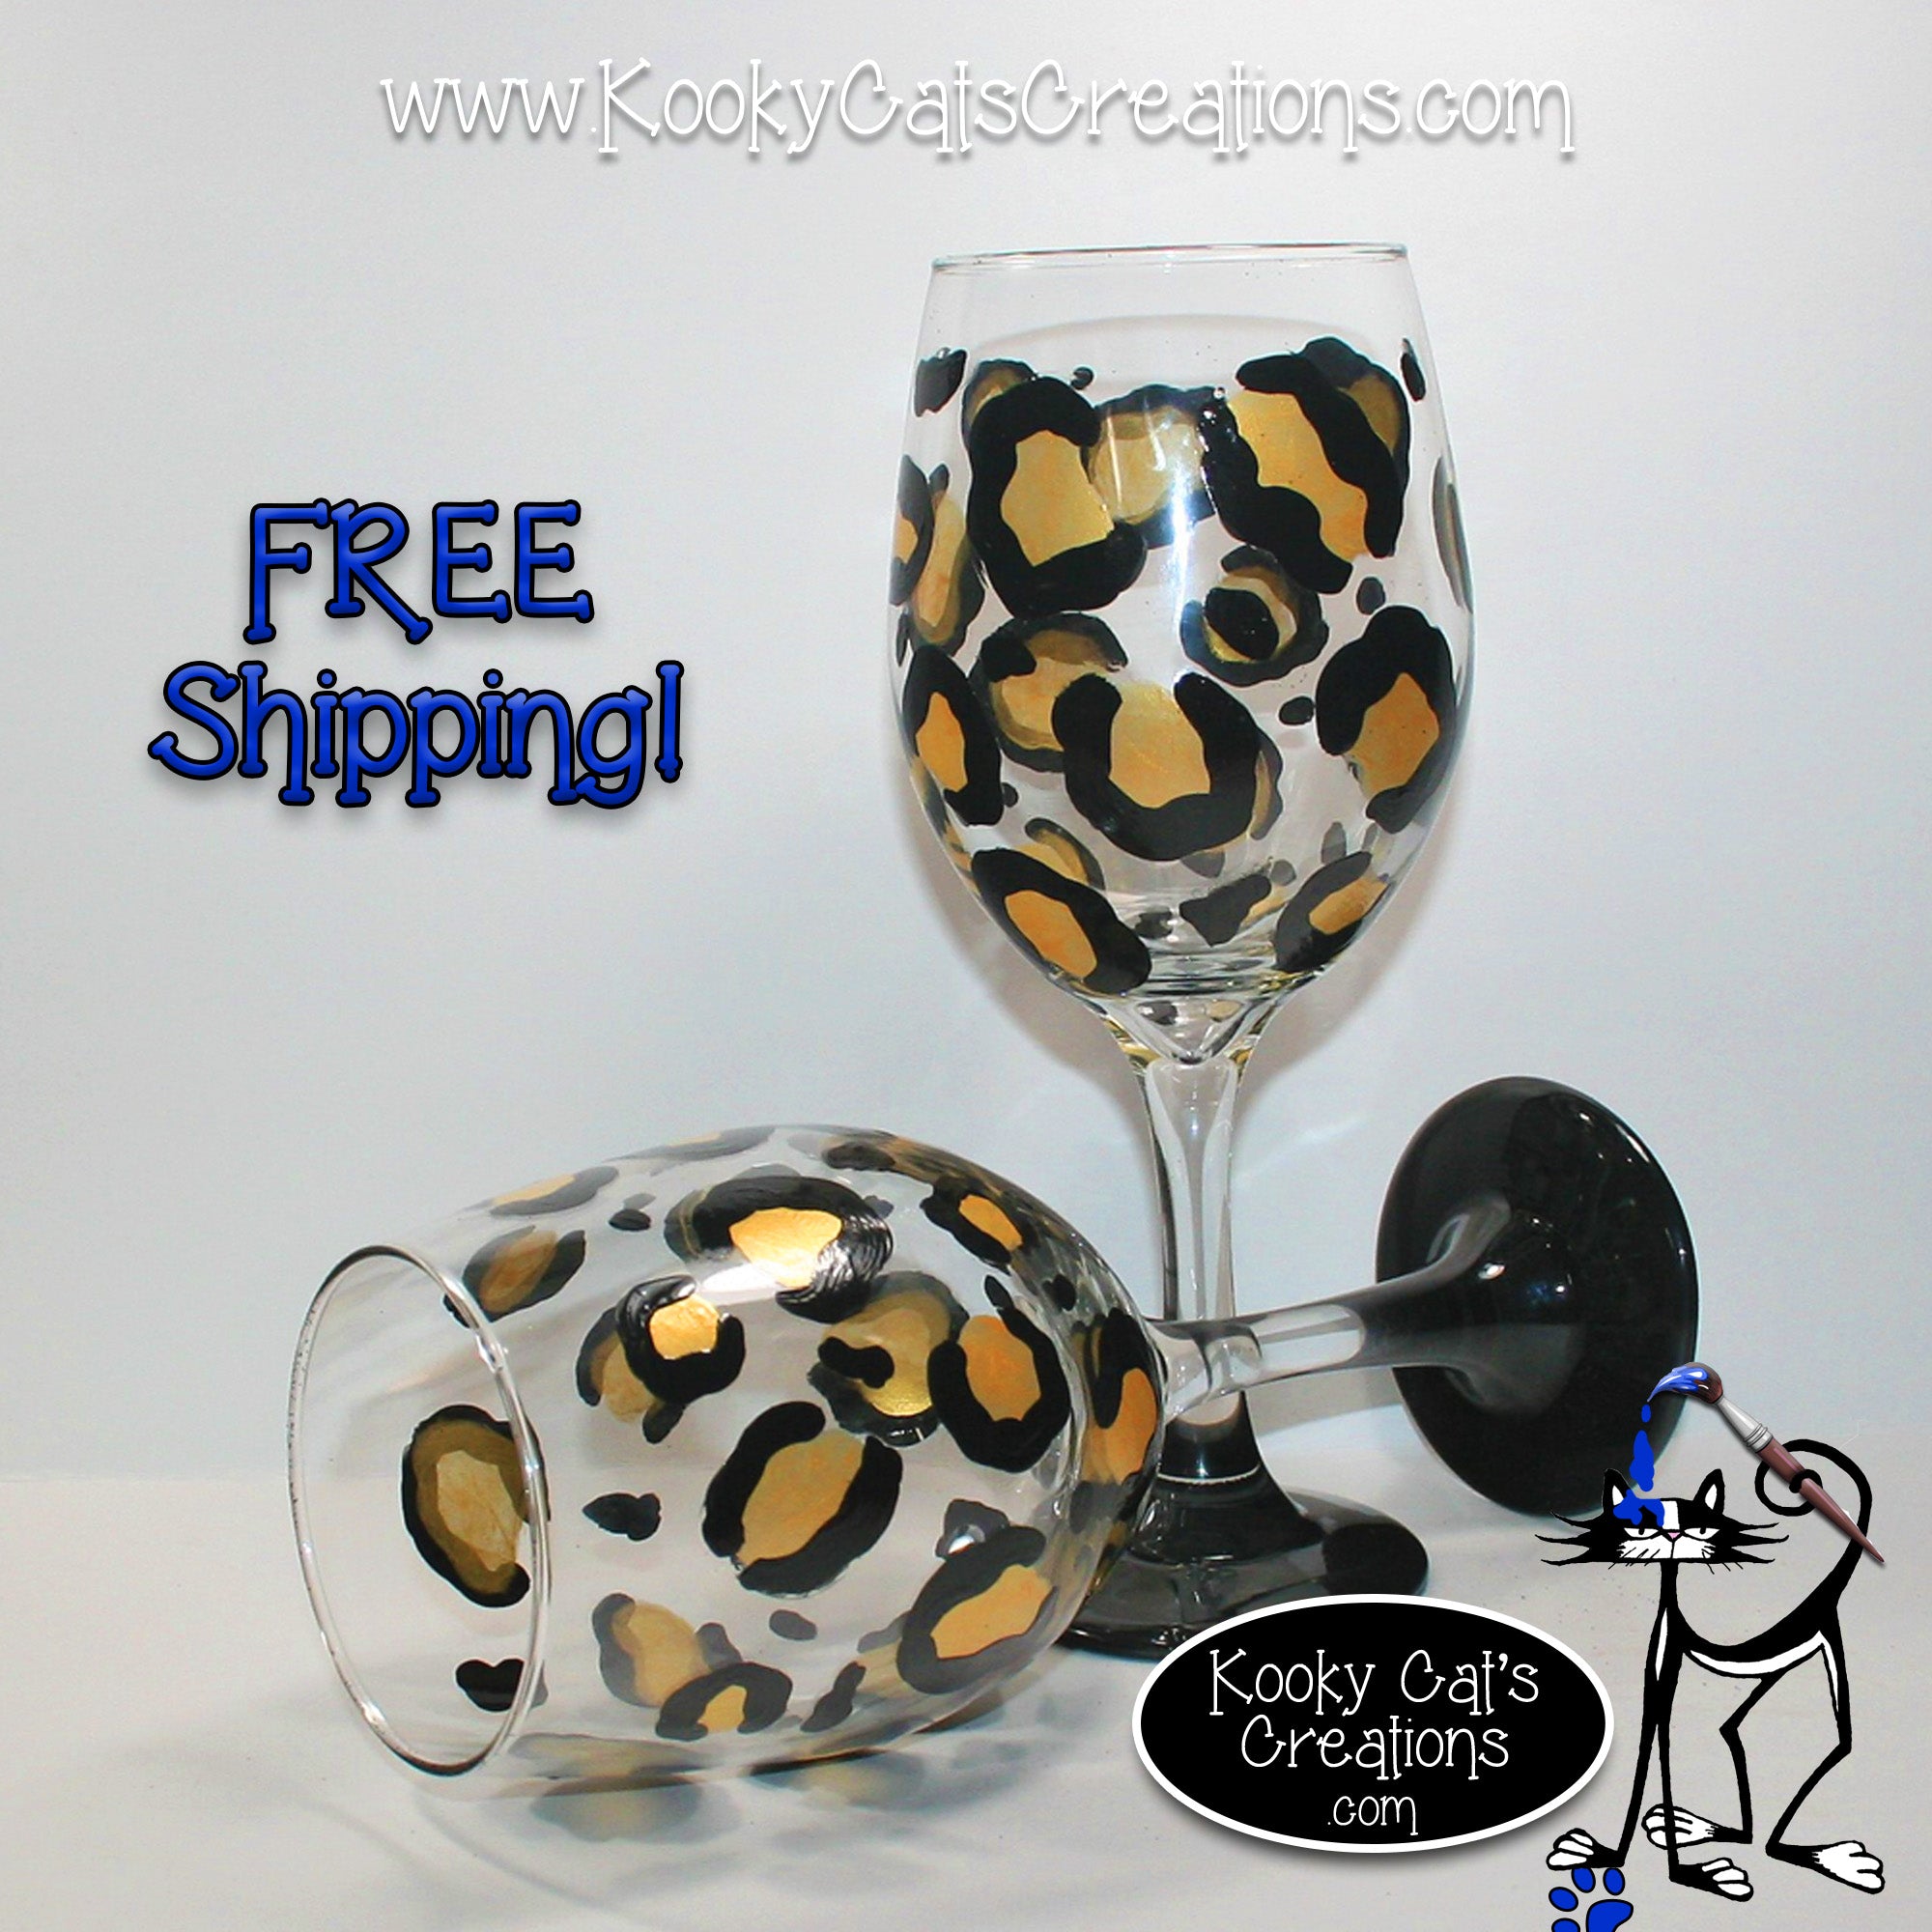 Hand Painted Wine Glass - Leopard Print - Original Designs by Cathy Kraemer